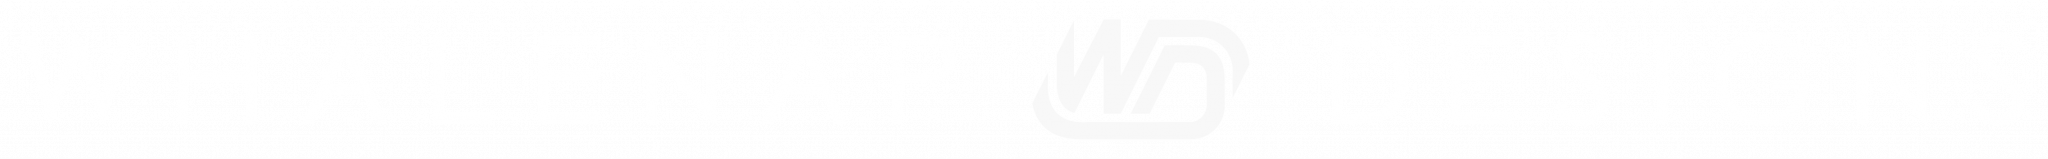 Whalenap Designs - logo & text monochrome 2500px blanc.png